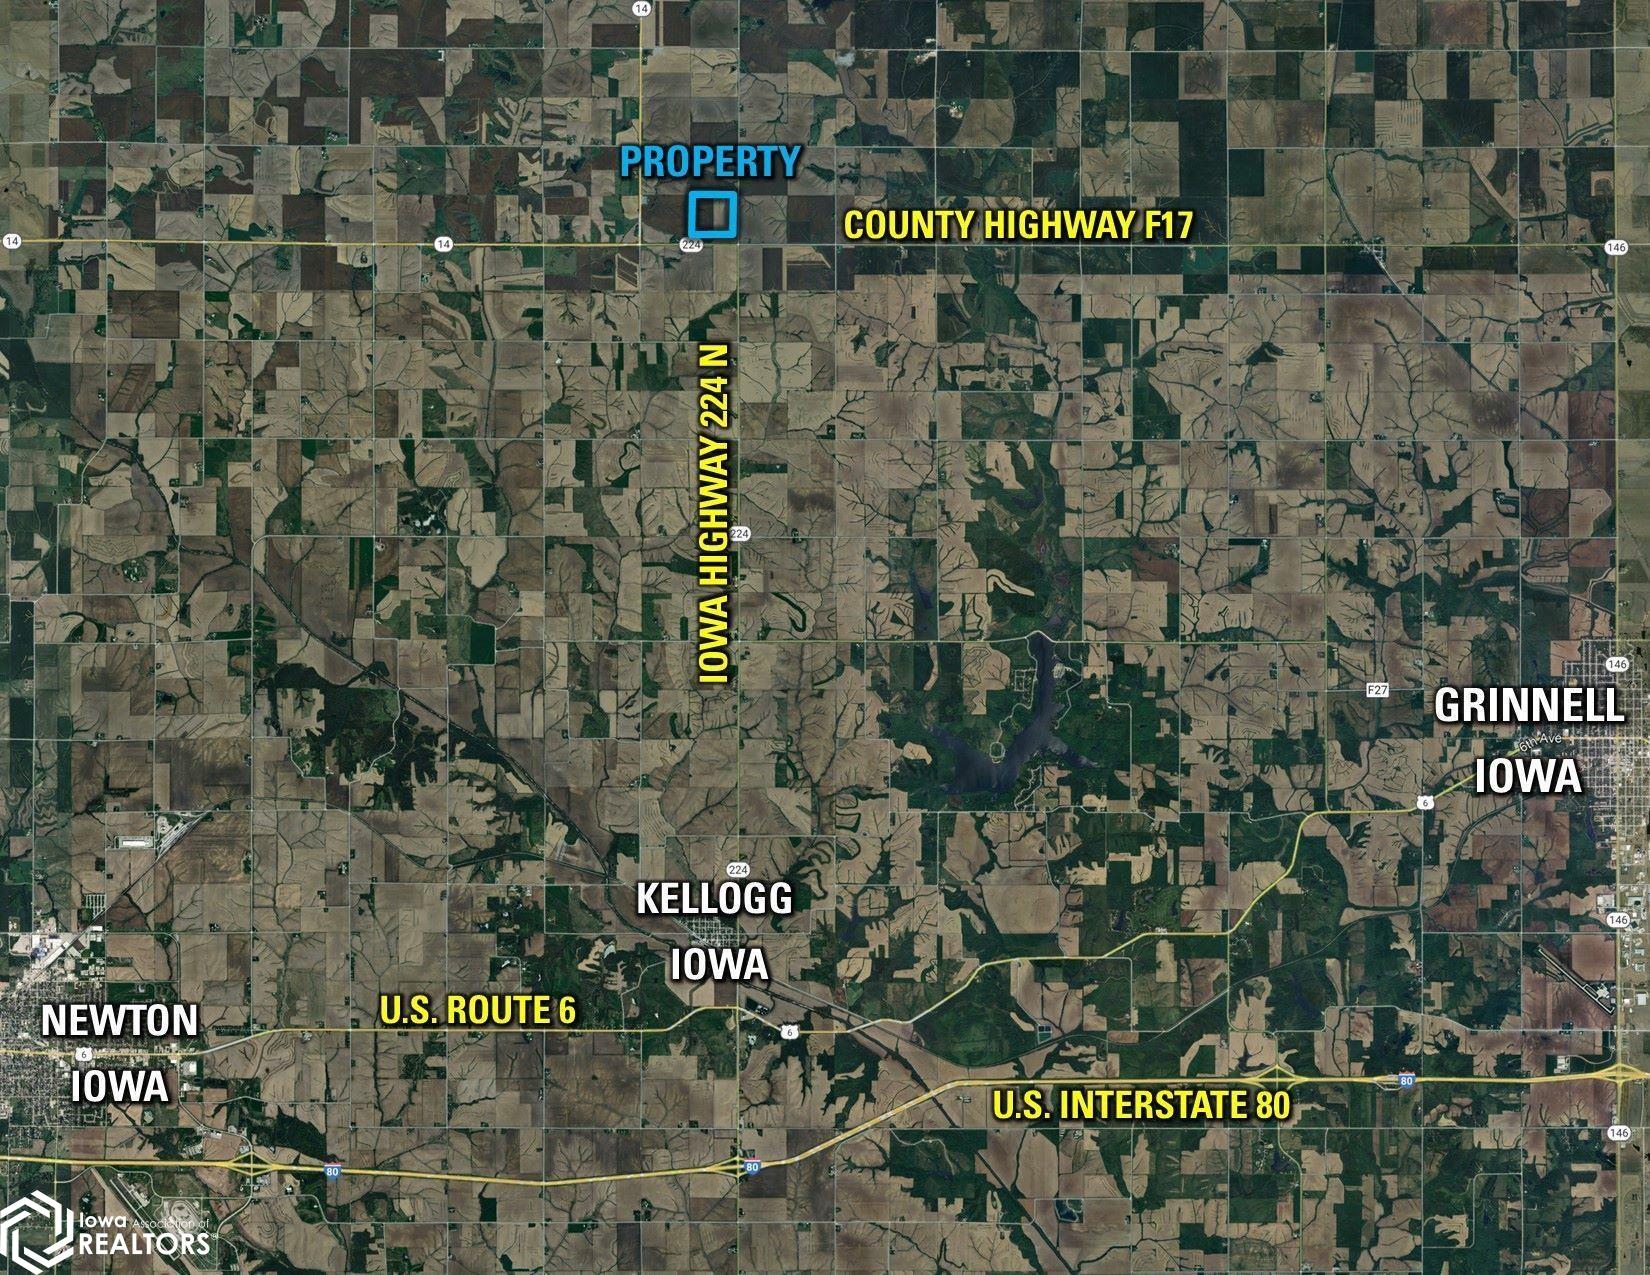 Iowa Highway 224 E, Kellogg, Iowa 50135, ,Farm,For Sale,Iowa Highway 224 E,6316598